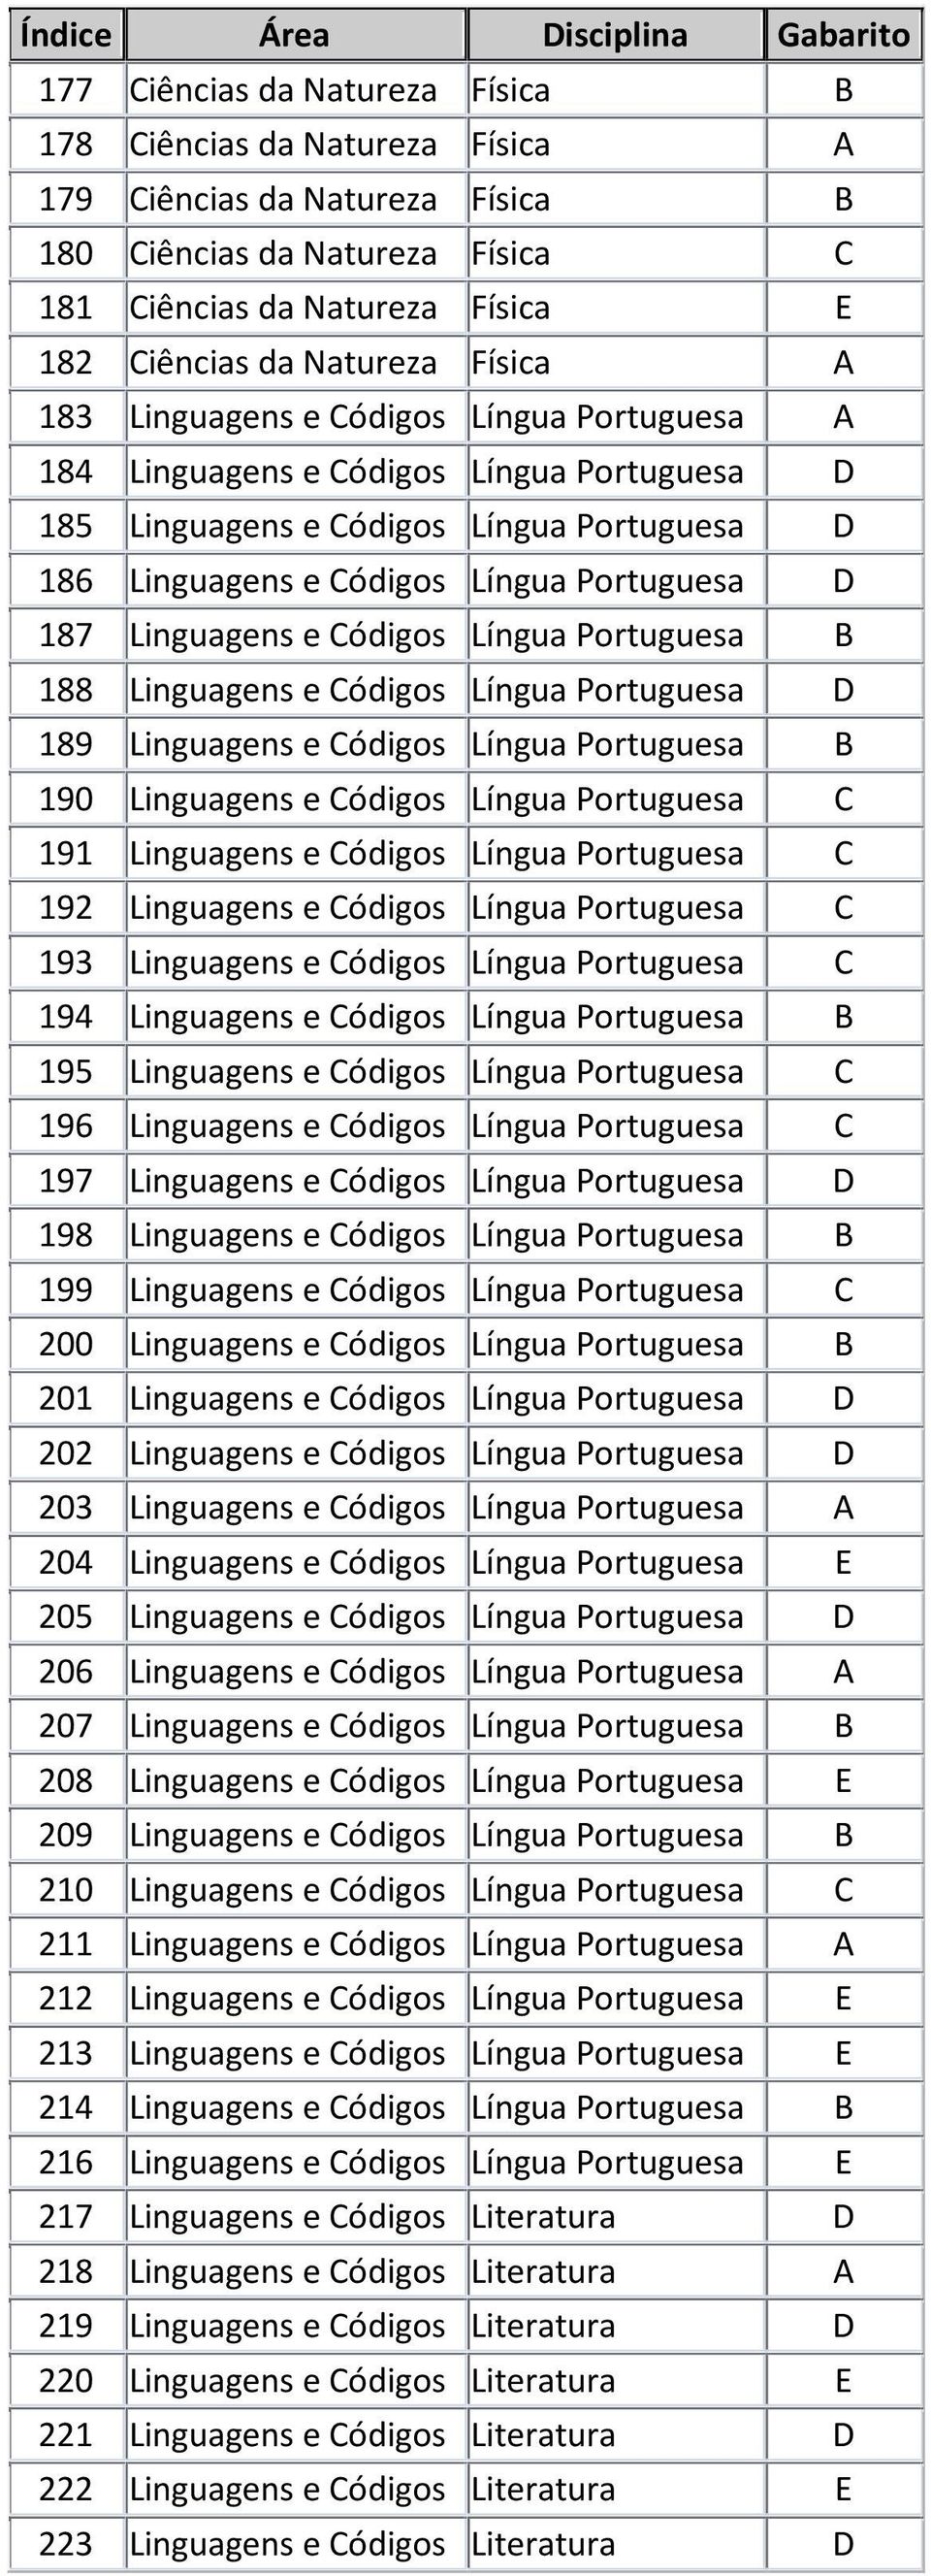 Linguagens e Códigos Língua Portuguesa B 188 Linguagens e Códigos Língua Portuguesa D 189 Linguagens e Códigos Língua Portuguesa B 190 Linguagens e Códigos Língua Portuguesa C 191 Linguagens e